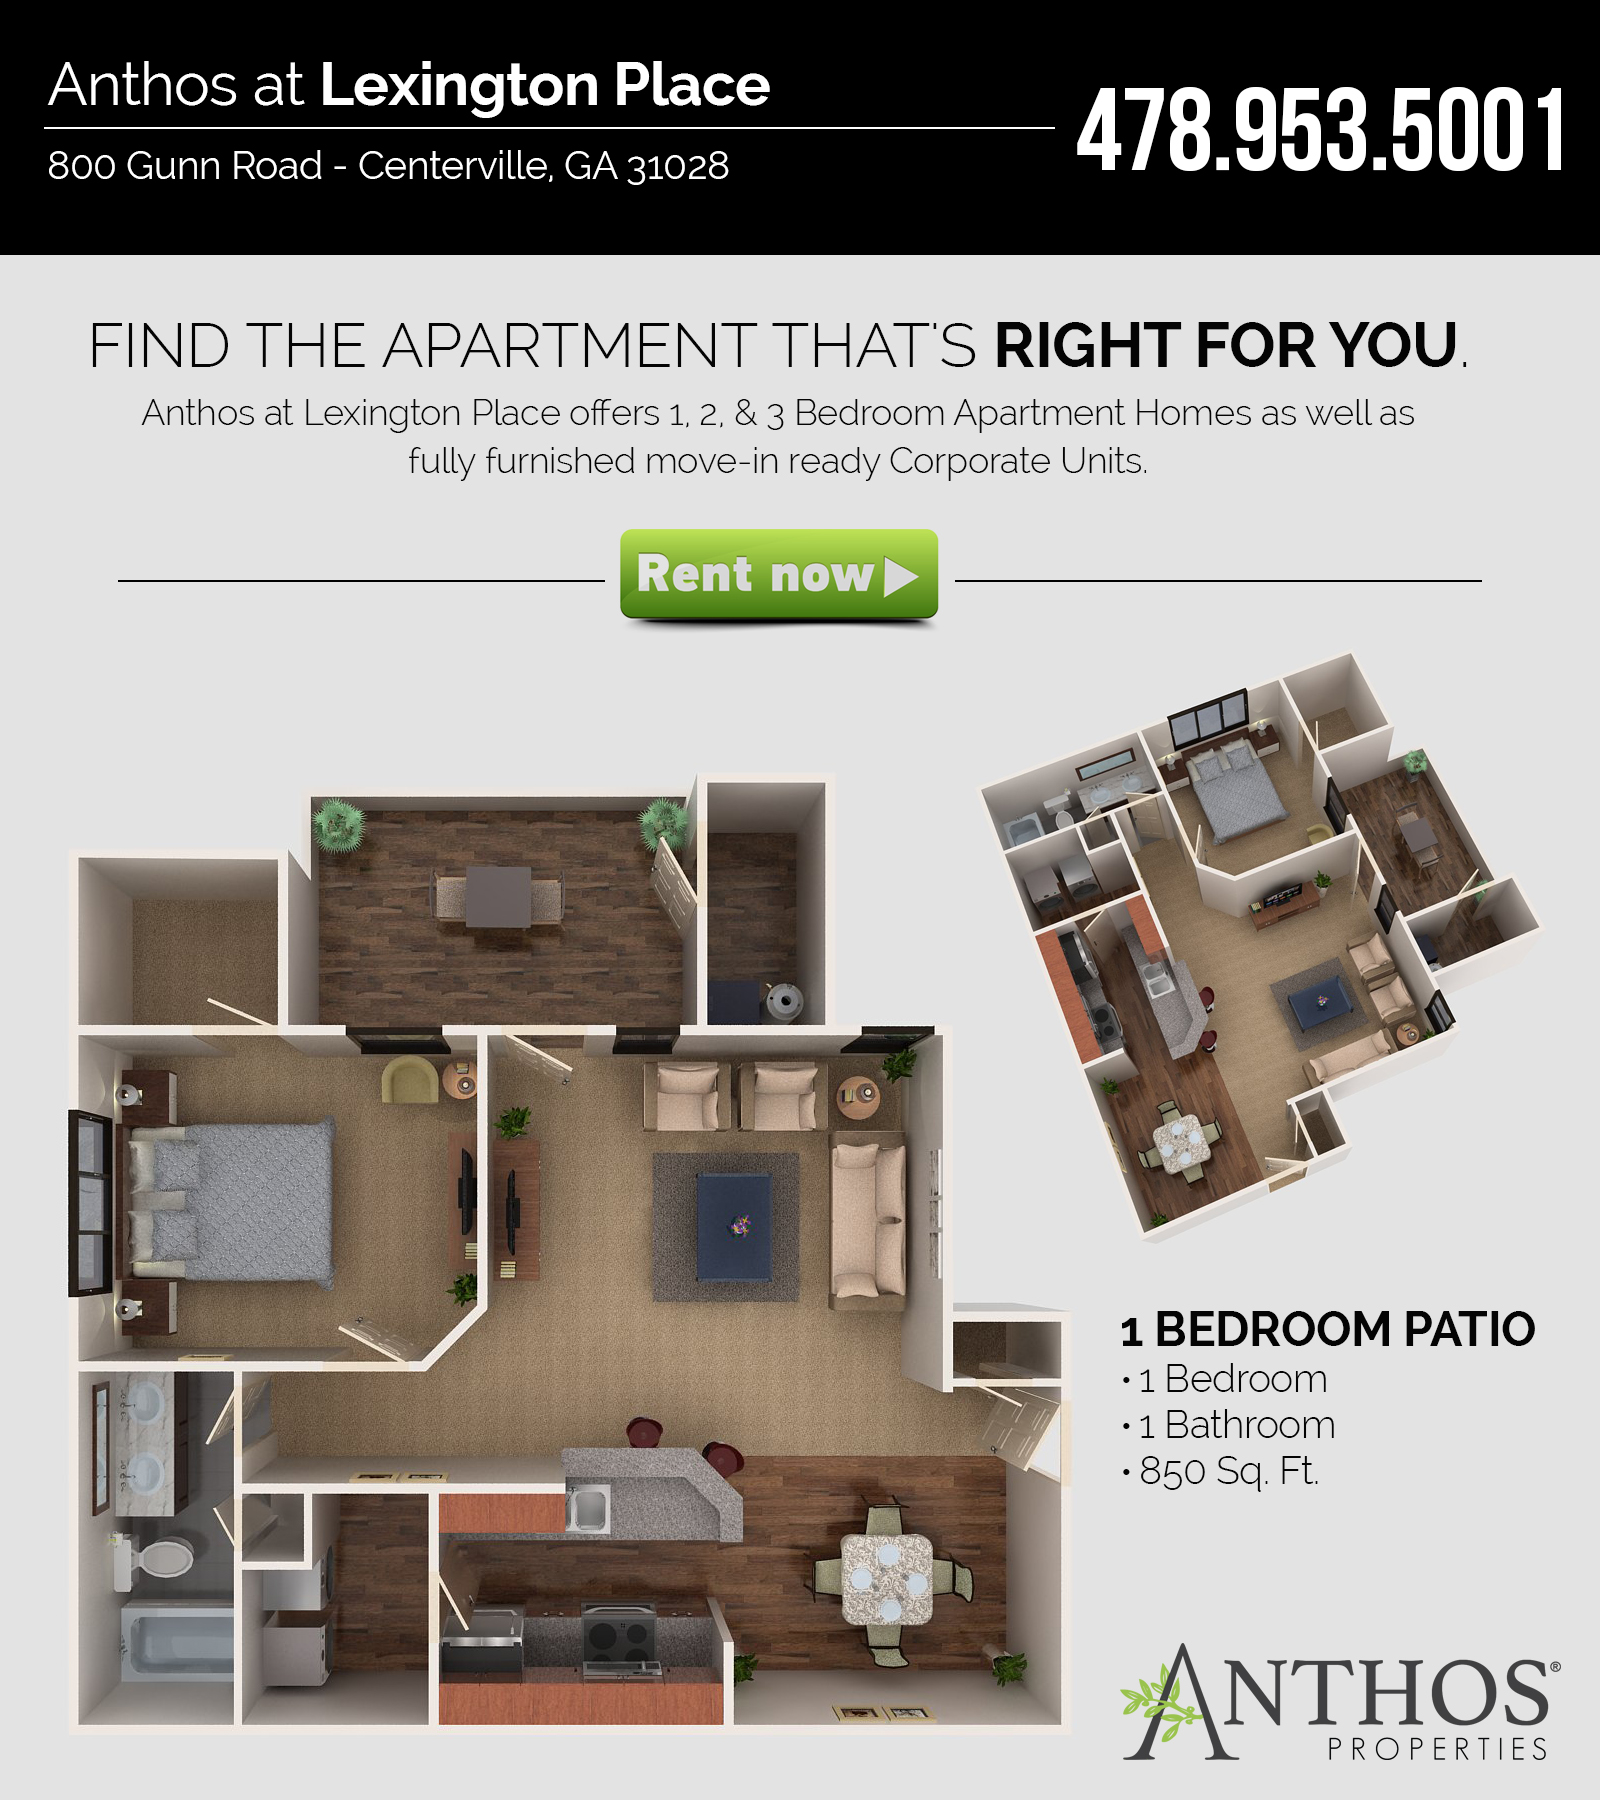 Centerville Anthos Properties